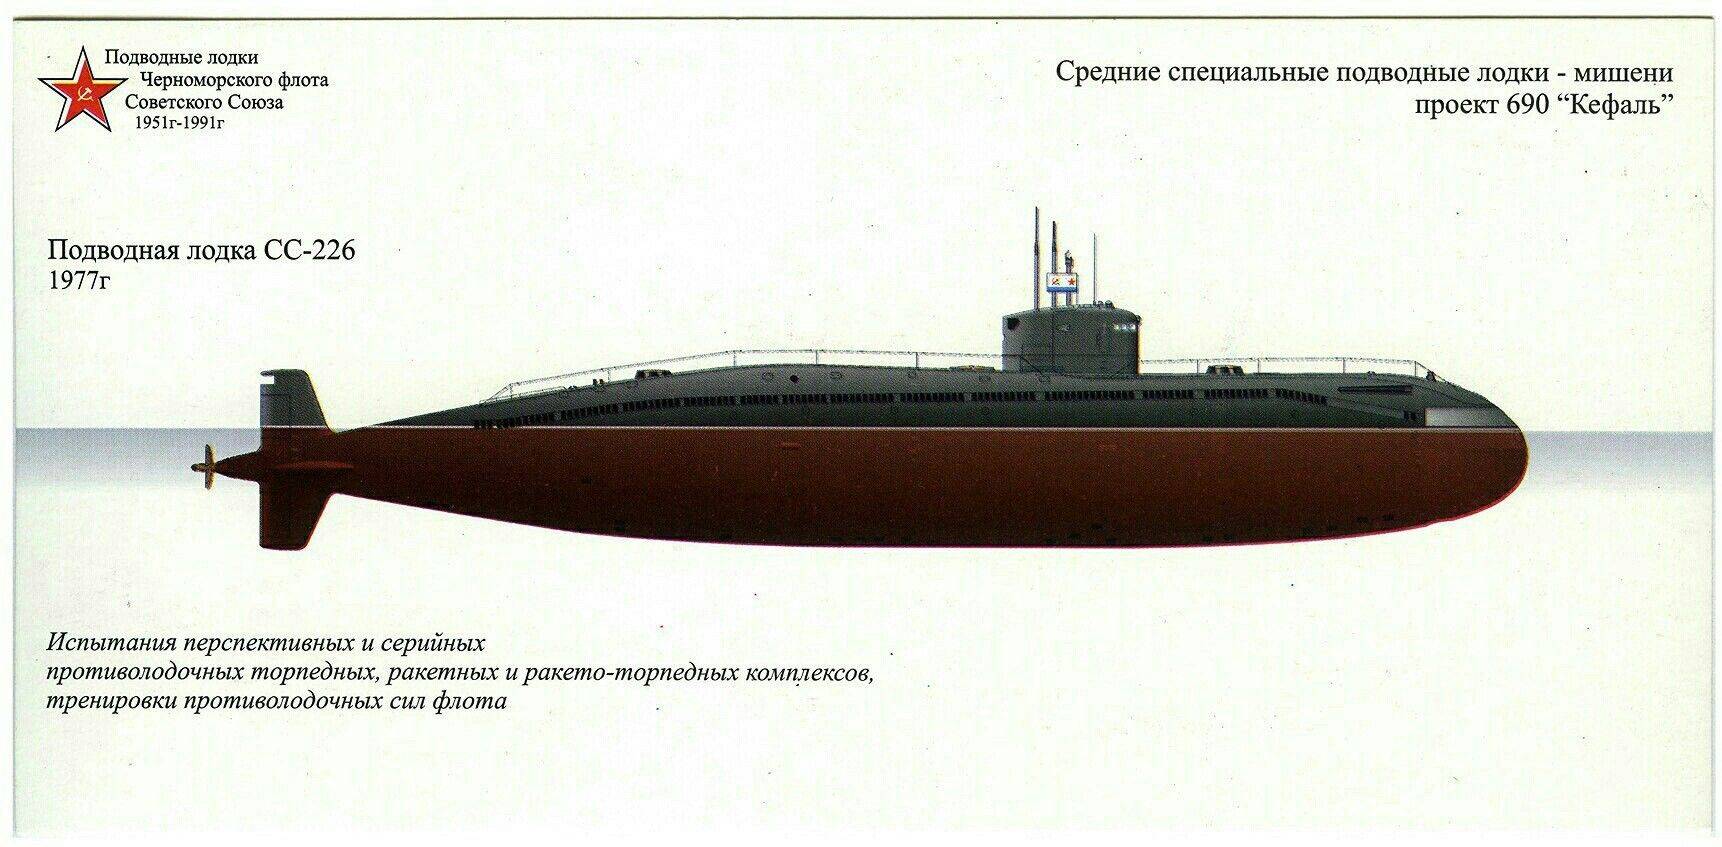 Подводная лодка класса карп - karp-class submarine - dev.abcdef.wiki